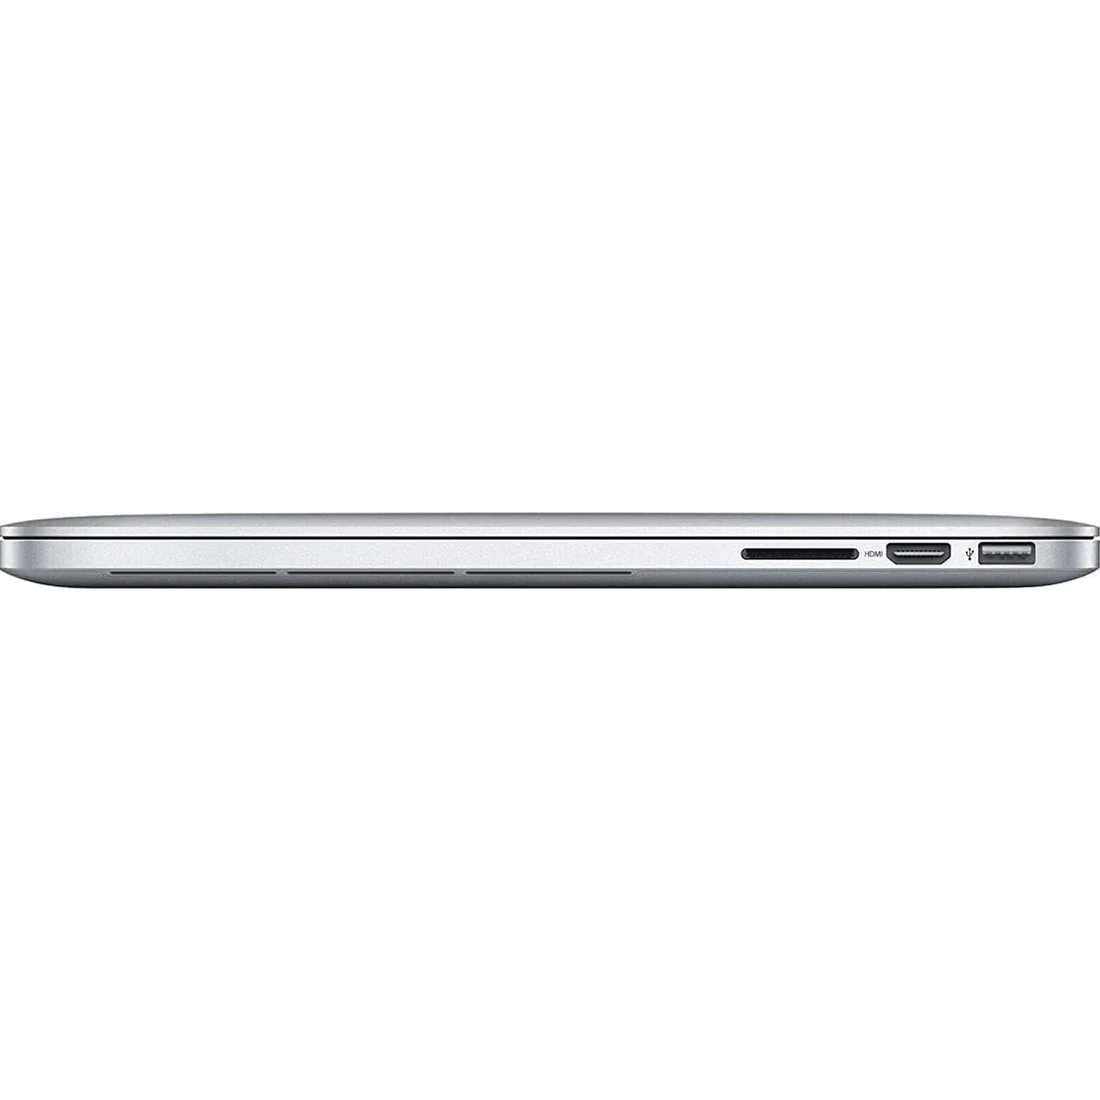 Apple MacBook A1398, 2013, i7, 8 GB, 256 SSD, Silver, Intel Core i7 / 2.4ghz